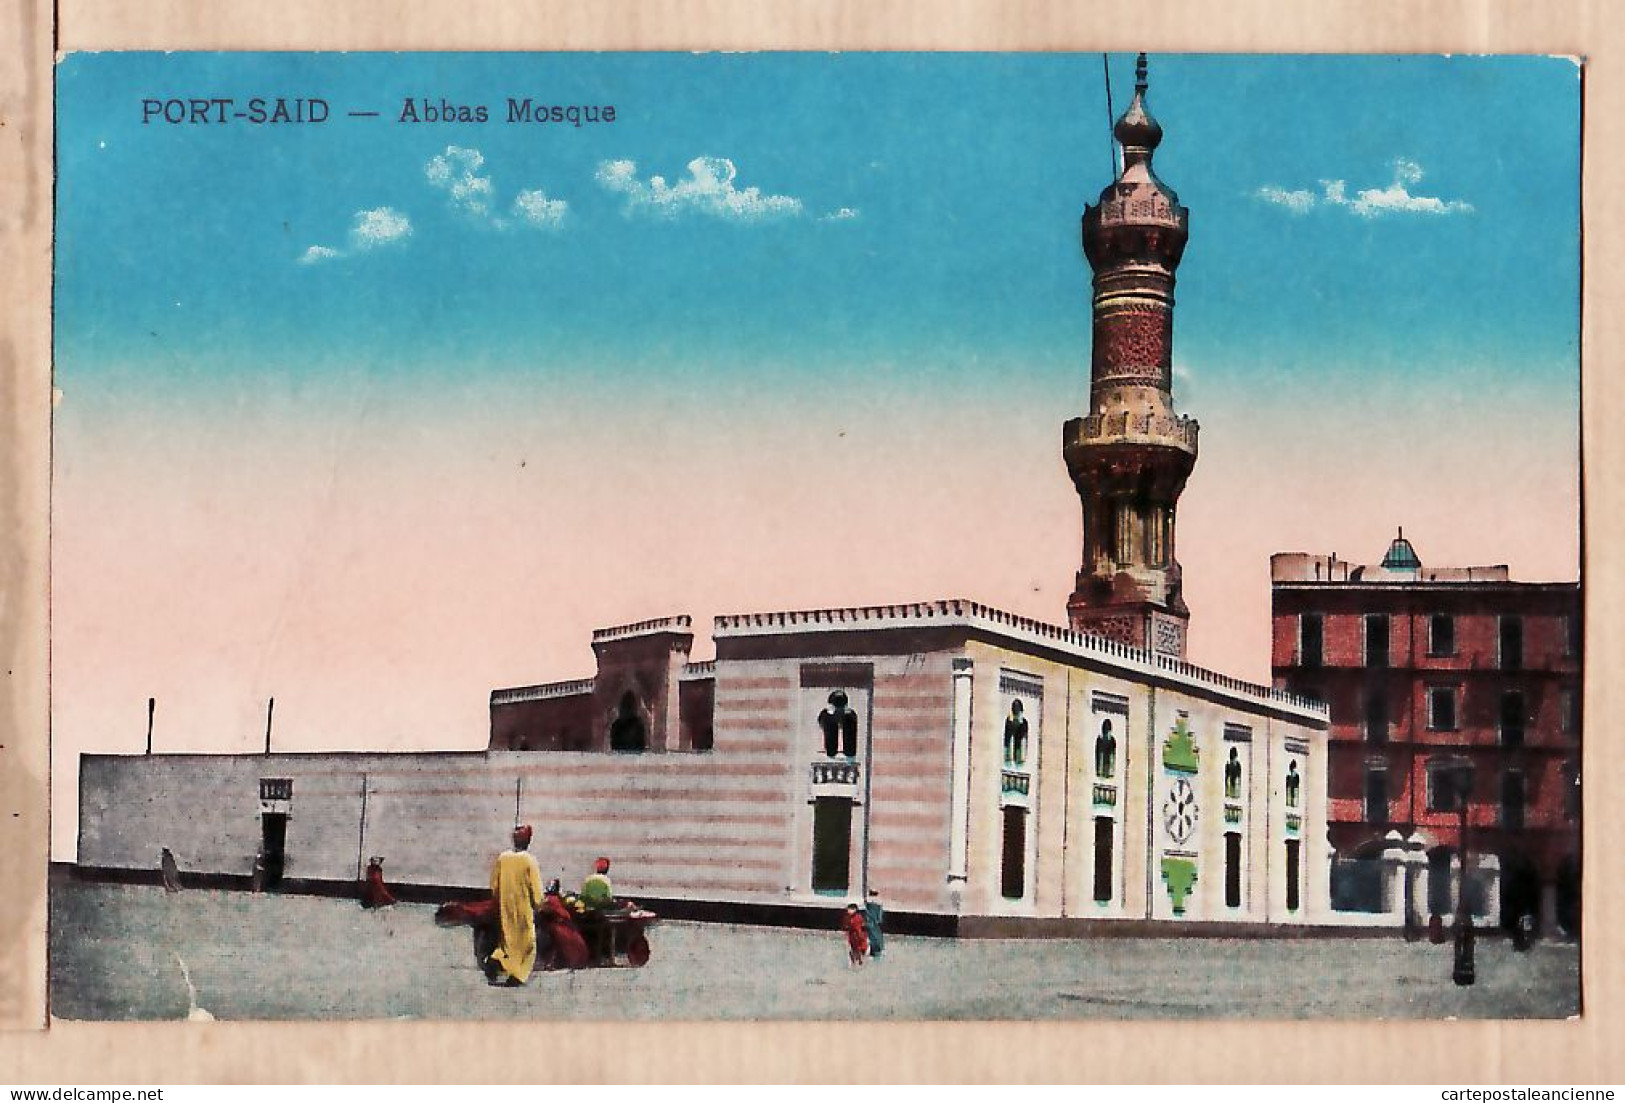 01850 / Egypt SUEZ PORT-SAÏD ABBAS MOSQUE 1910s Litho Color CAIRO POST CARD TRUST 369 Egypte Agypten Egipto - Port Said